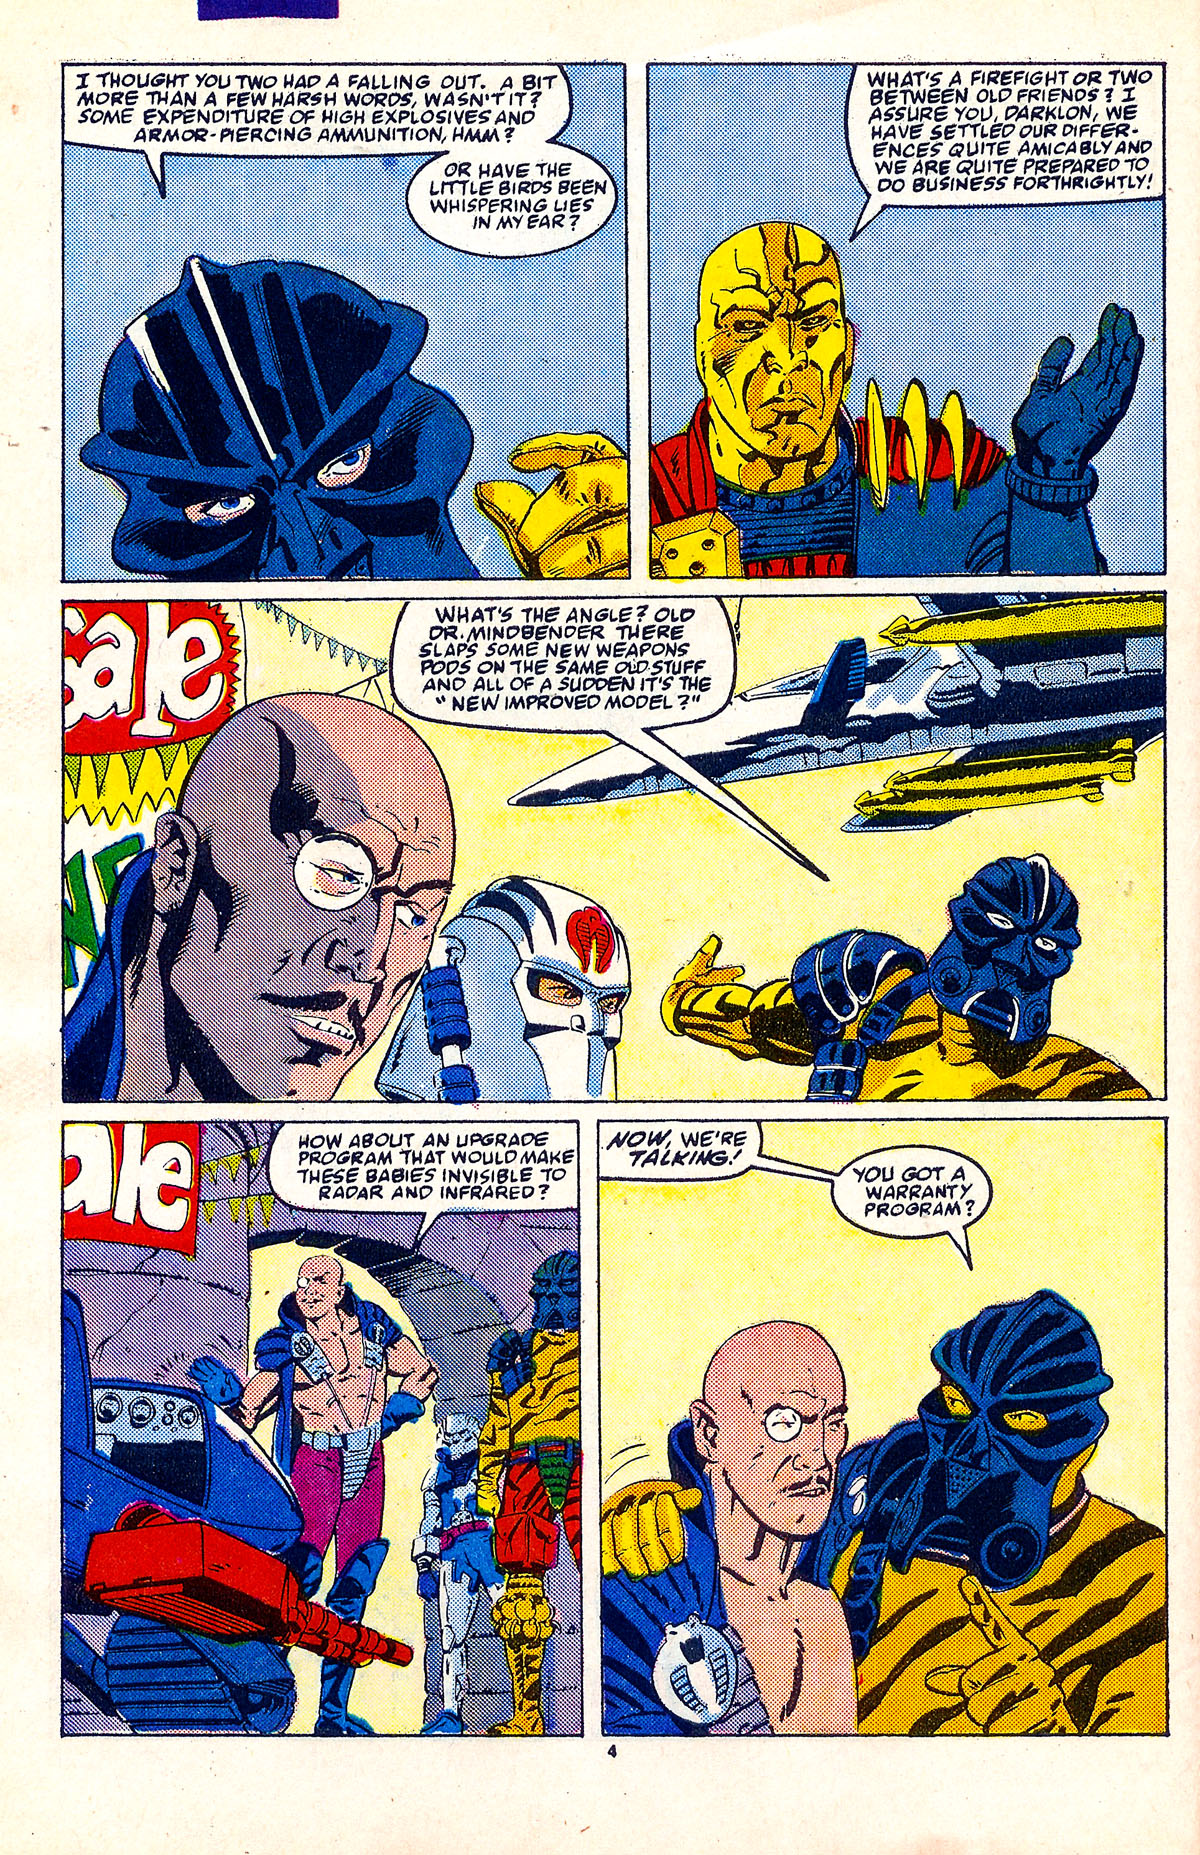 G.I. Joe: A Real American Hero 88 Page 4